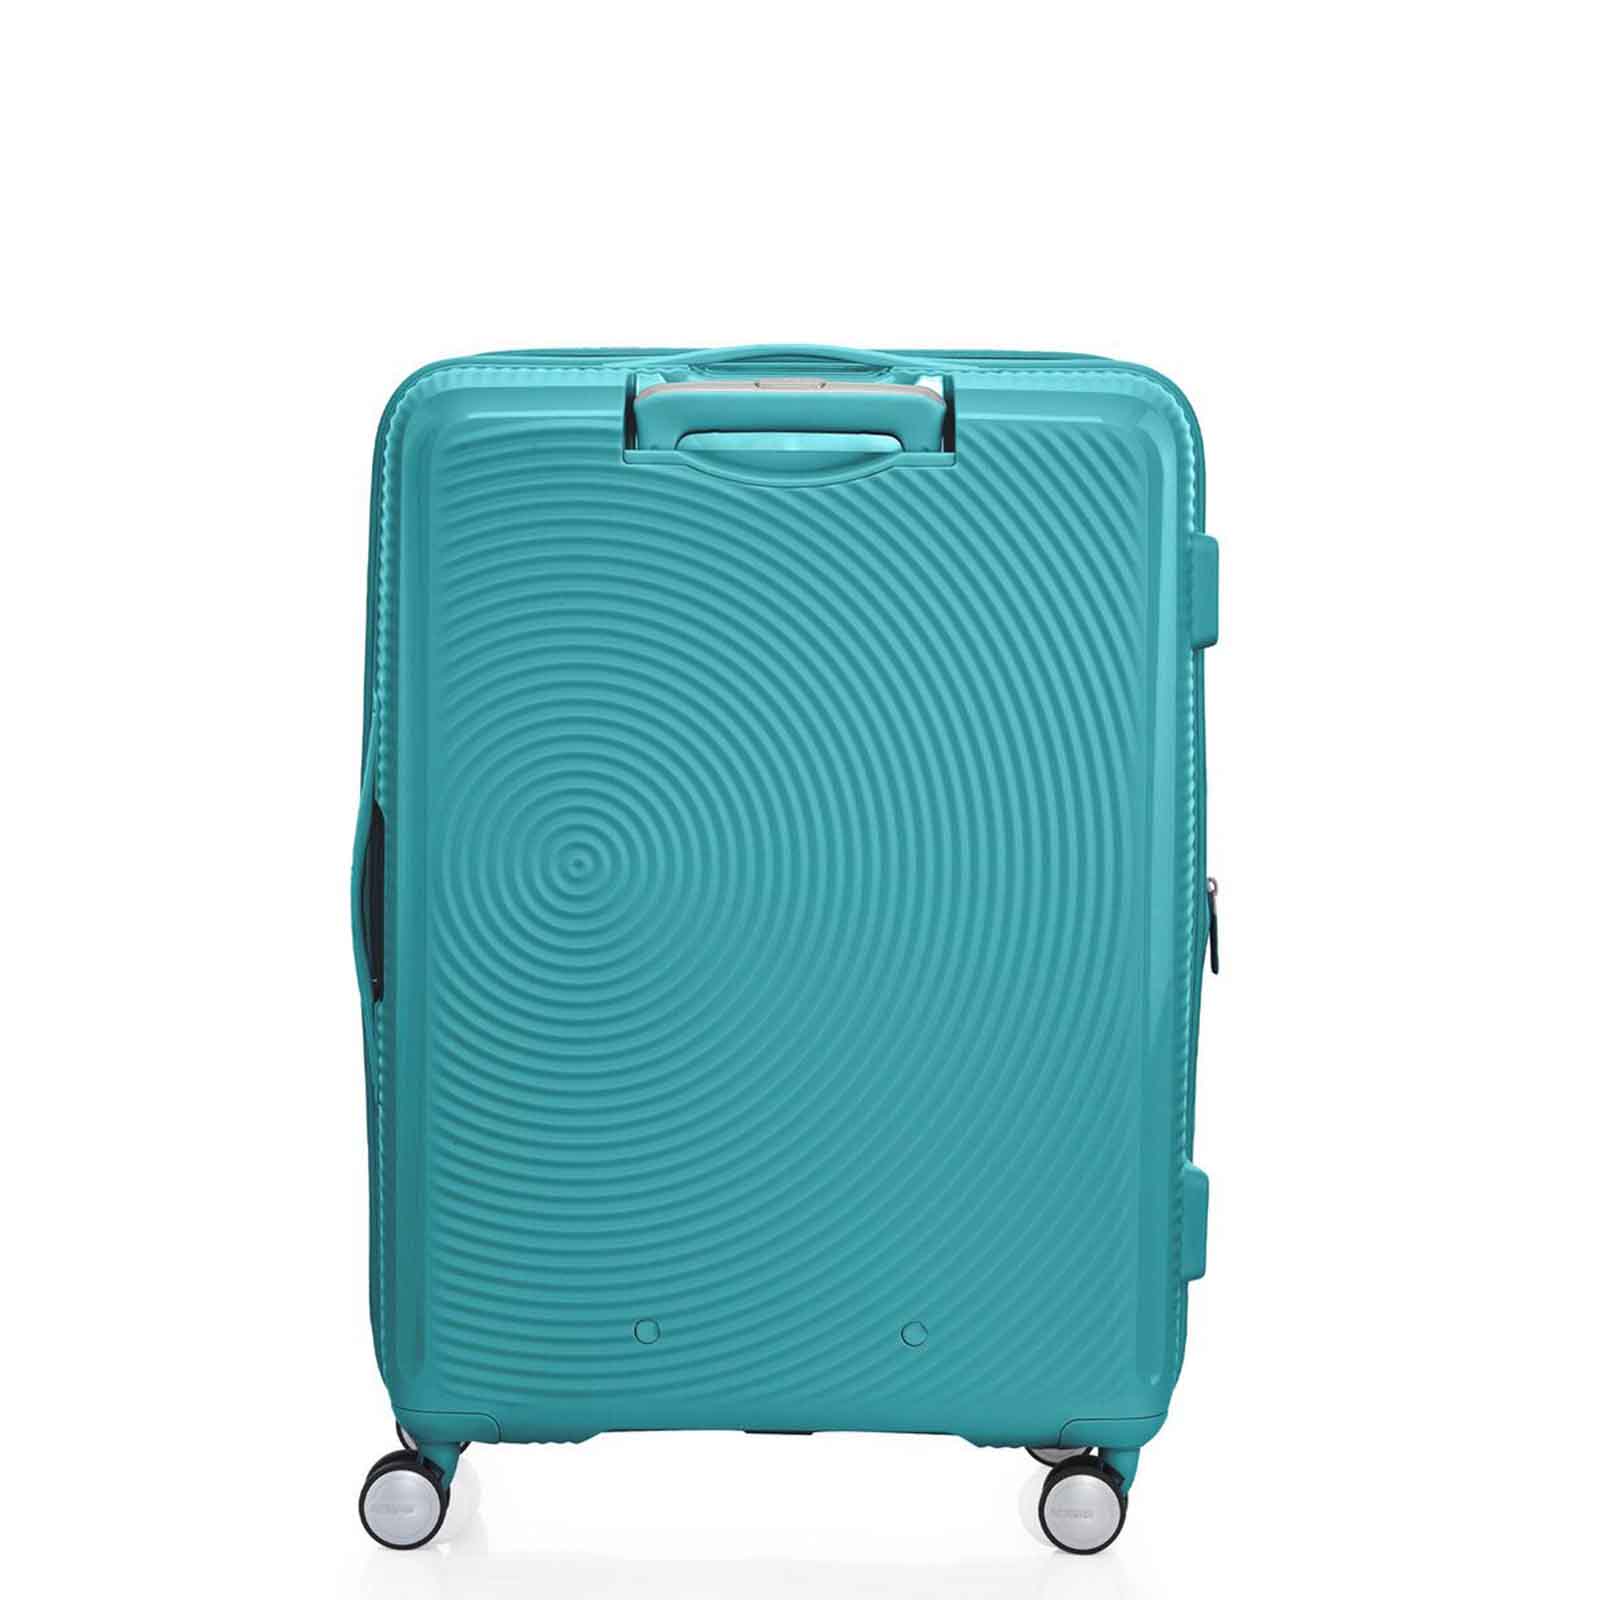 American-Tourister-Curio-2-69cm-Suitcase-Jade-Green-Back